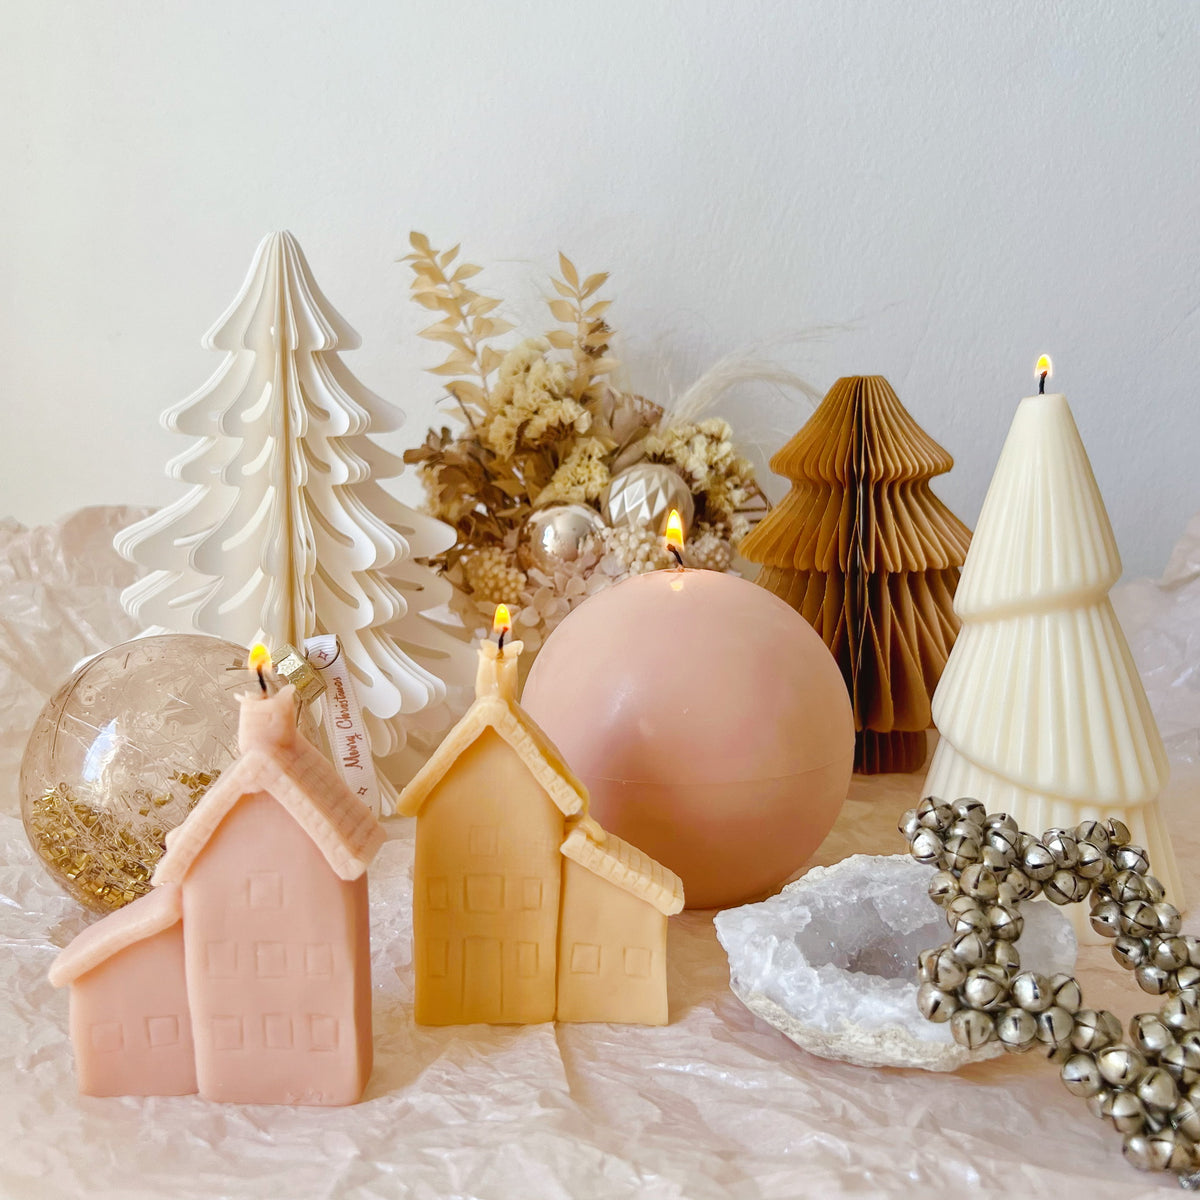 Sphere Ball Candle - Handmade Christmas Home Décor | LMJ Candles